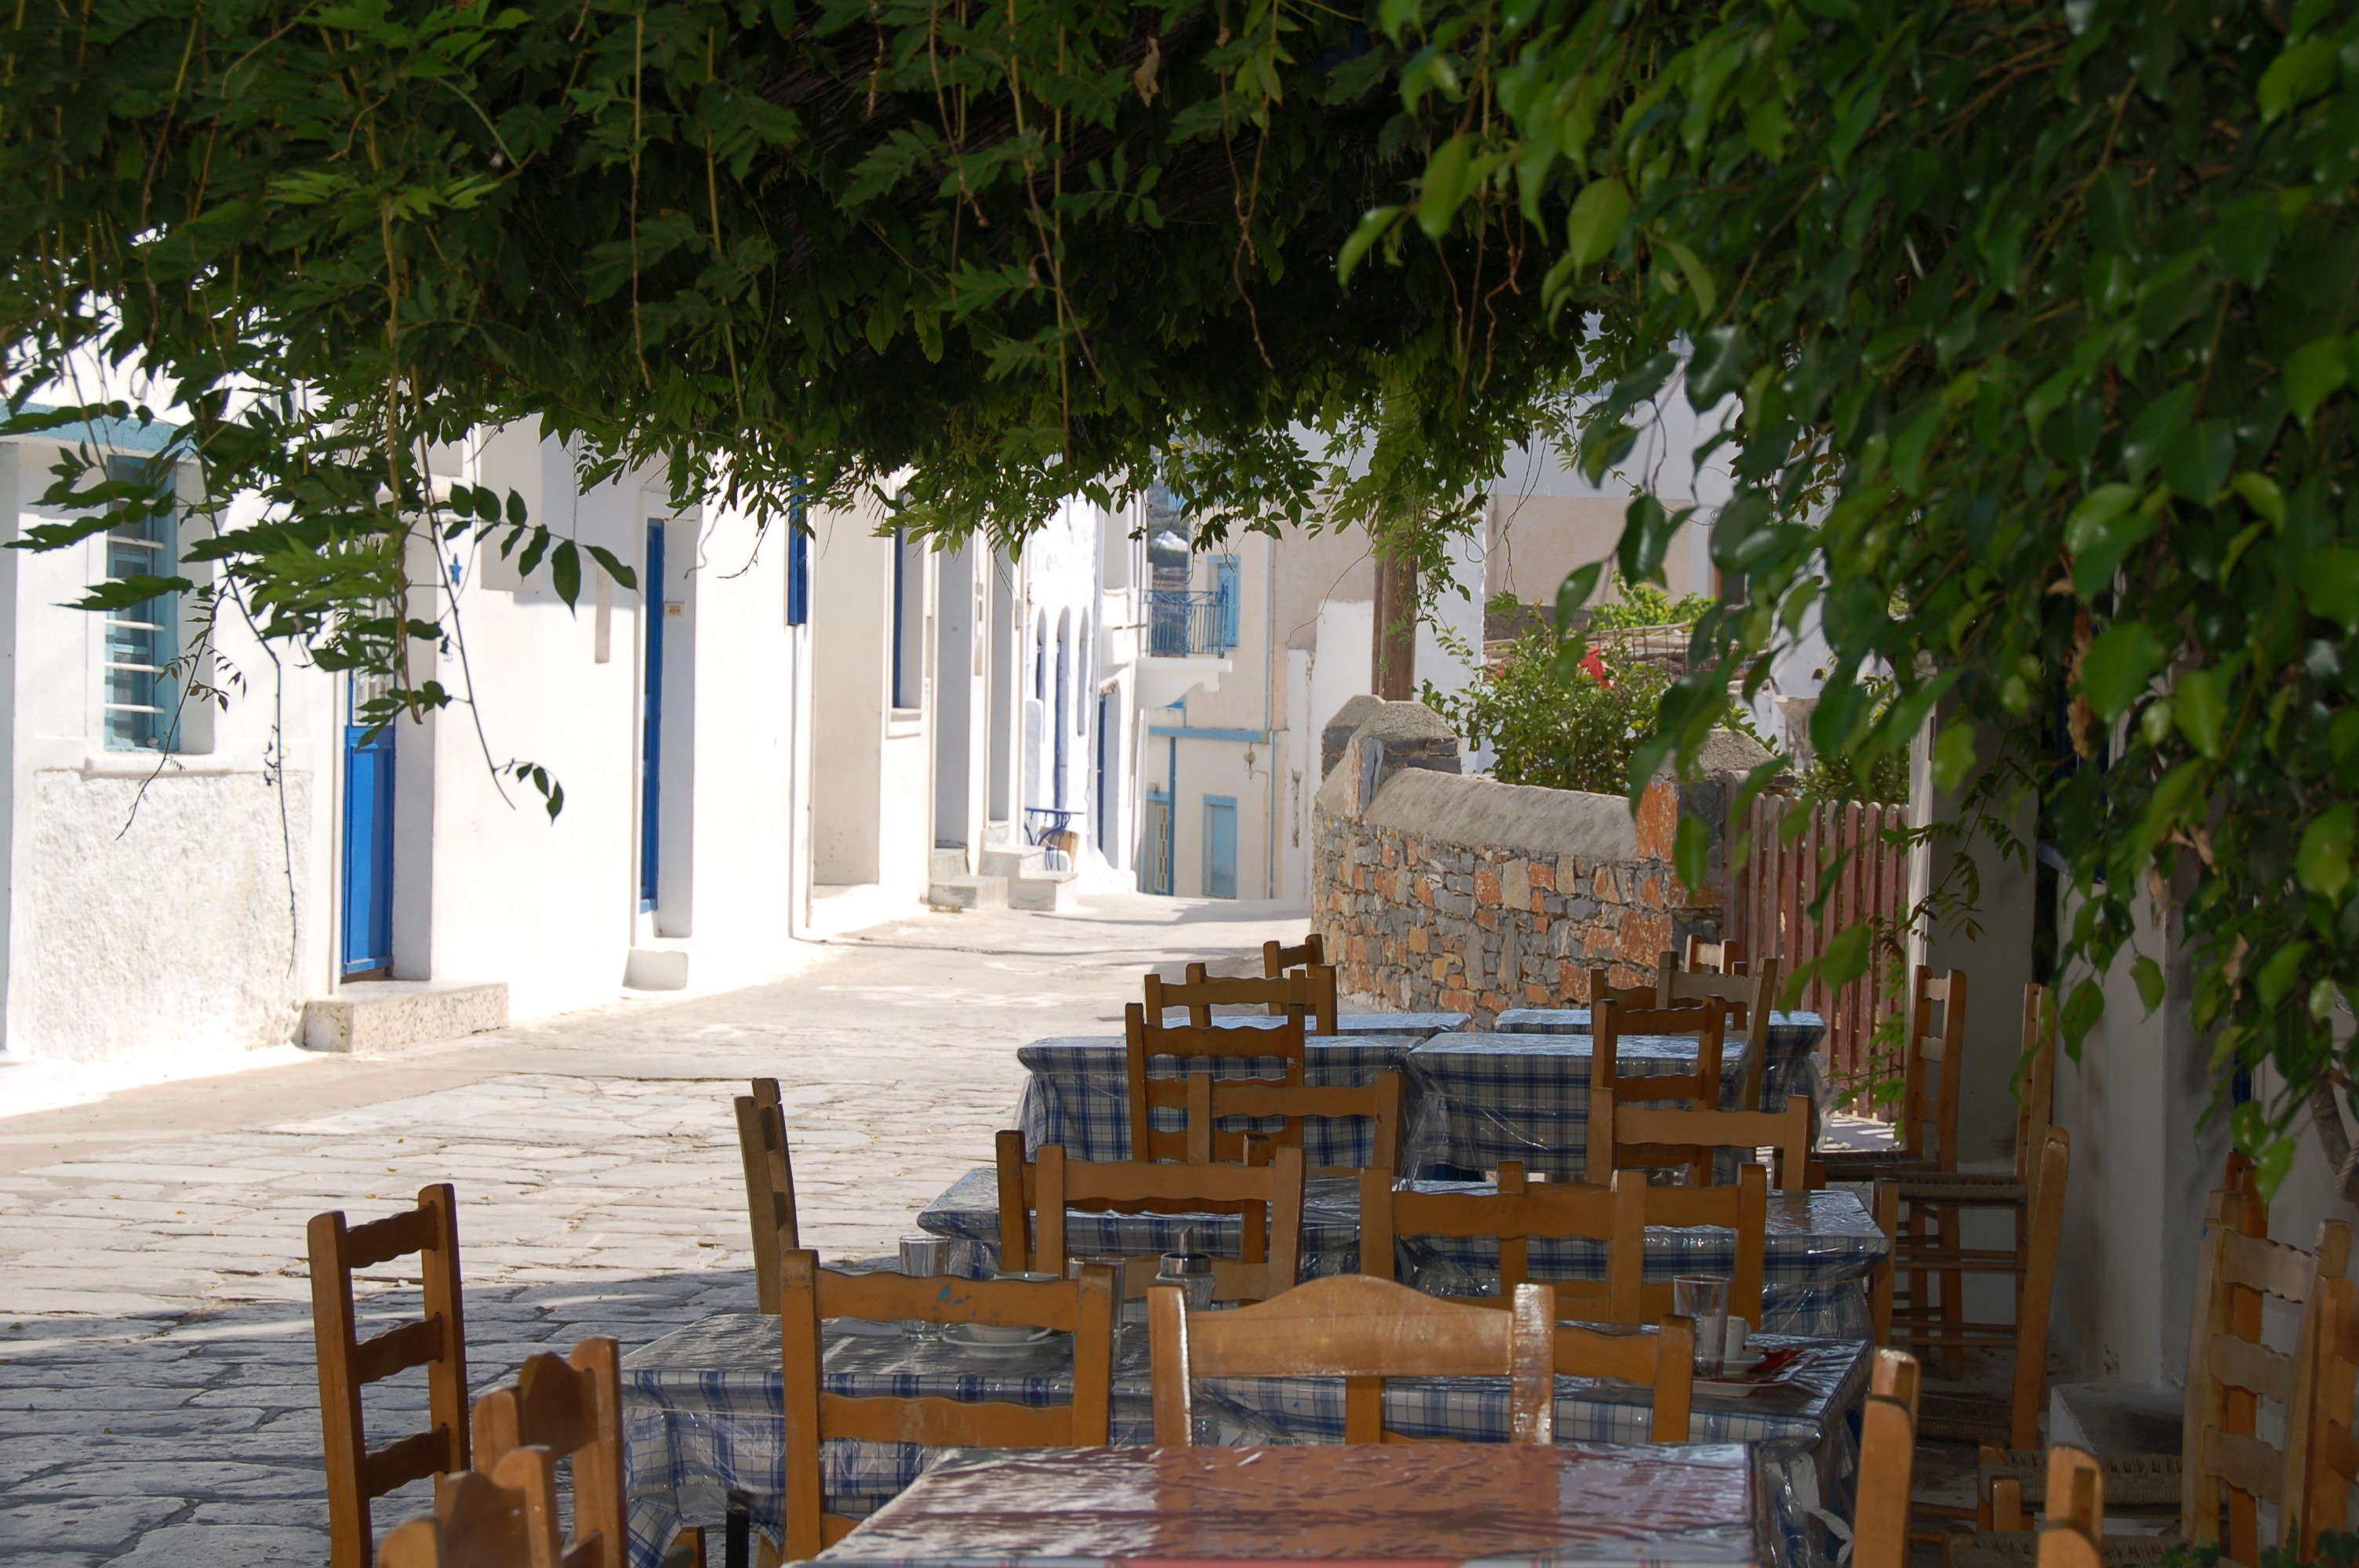 The village square in Langatha, Lankada, Langada, Amorgos